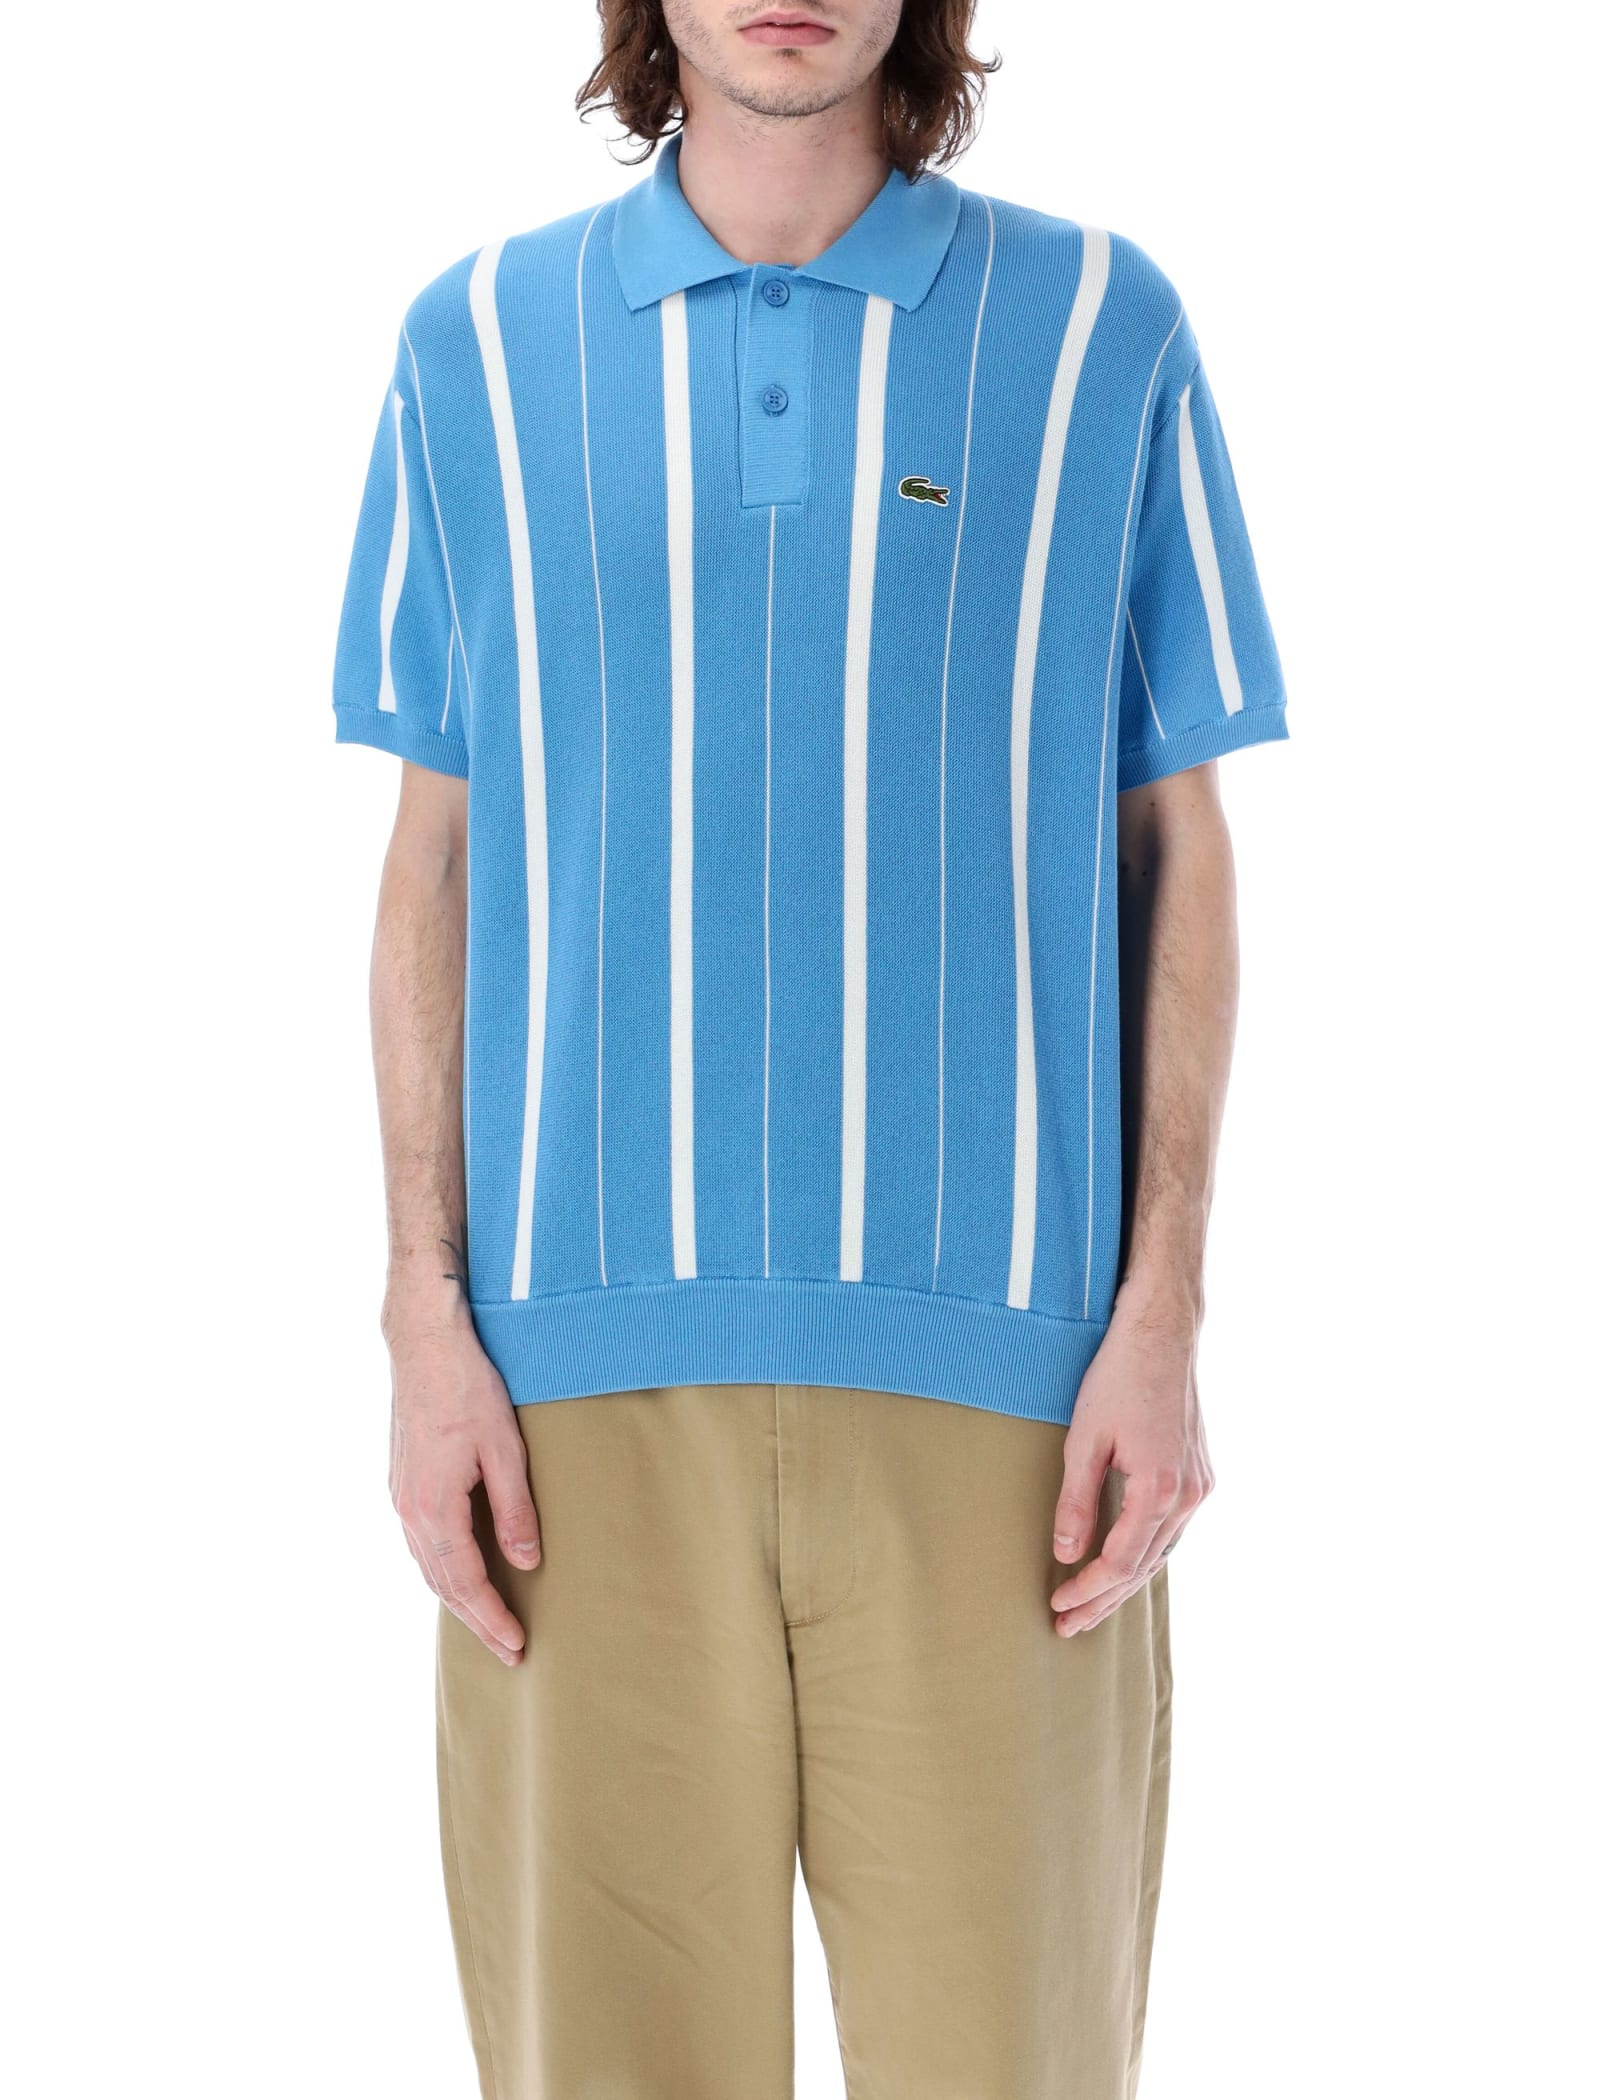 Lacoste Striped Polo Shirt